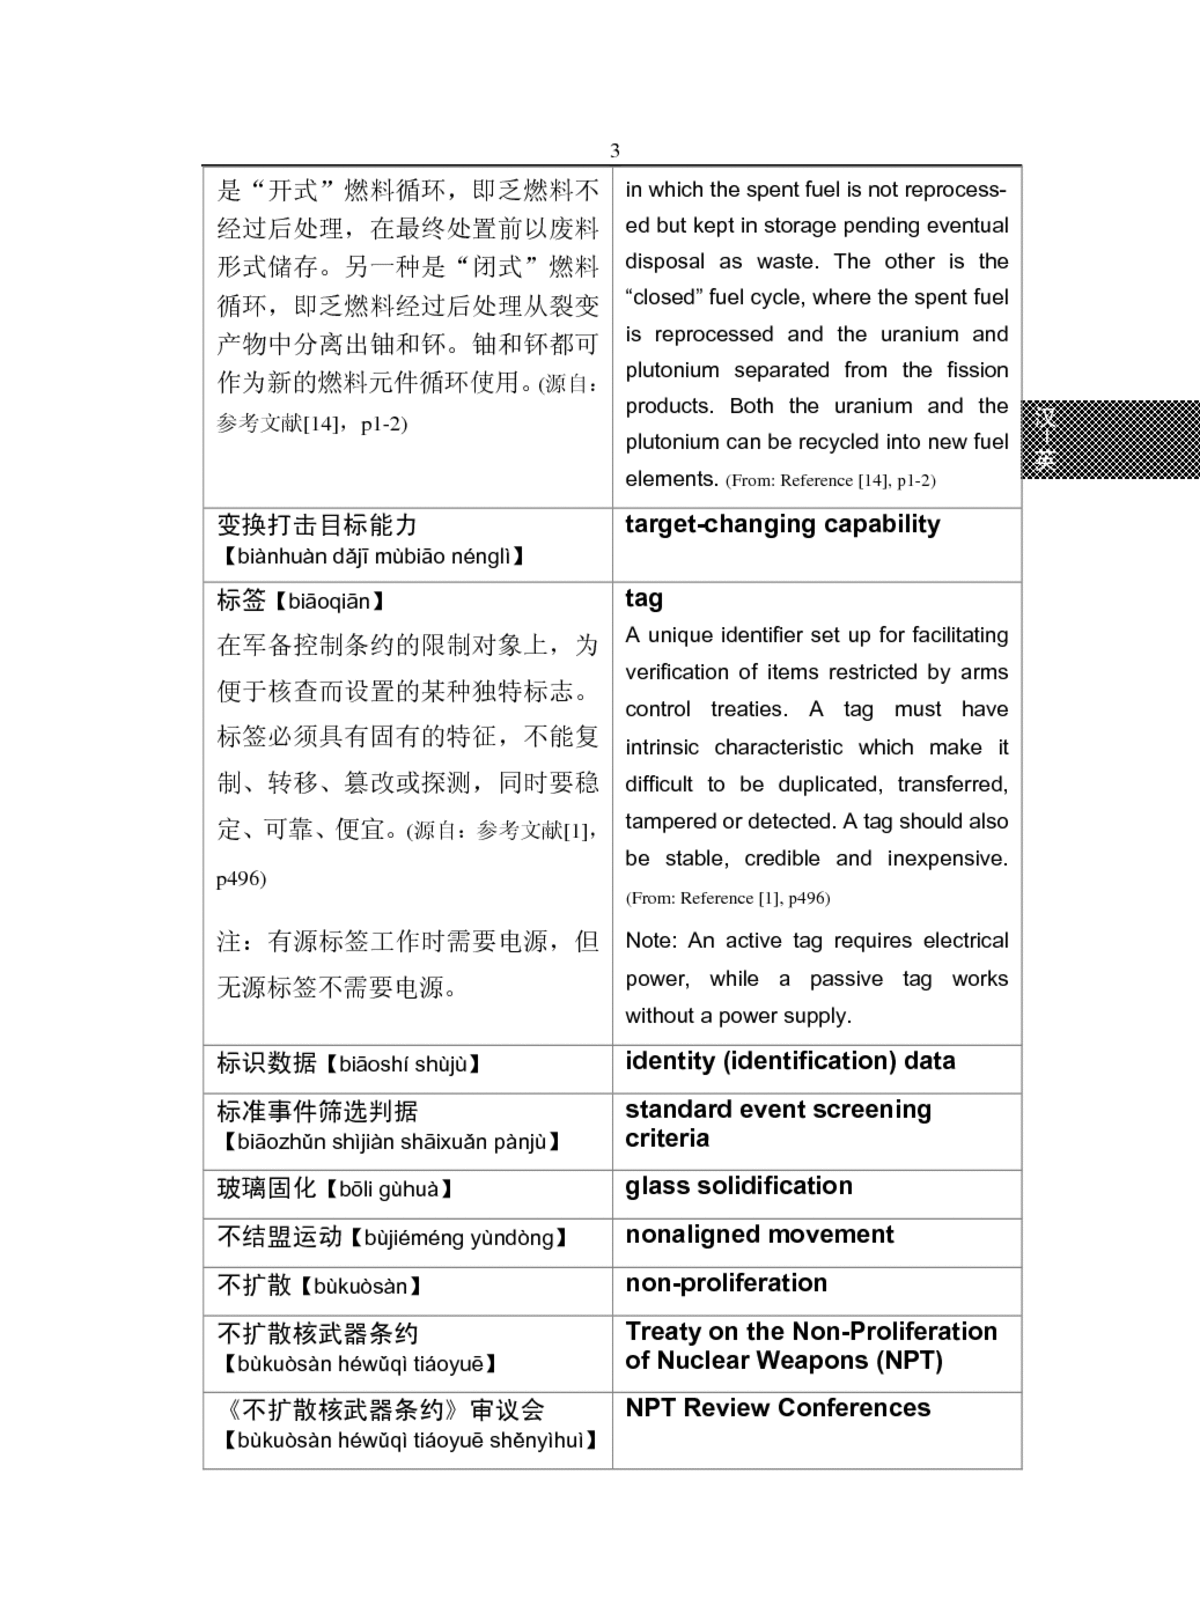 English to Chinese Document Translation Character Encoding Problem